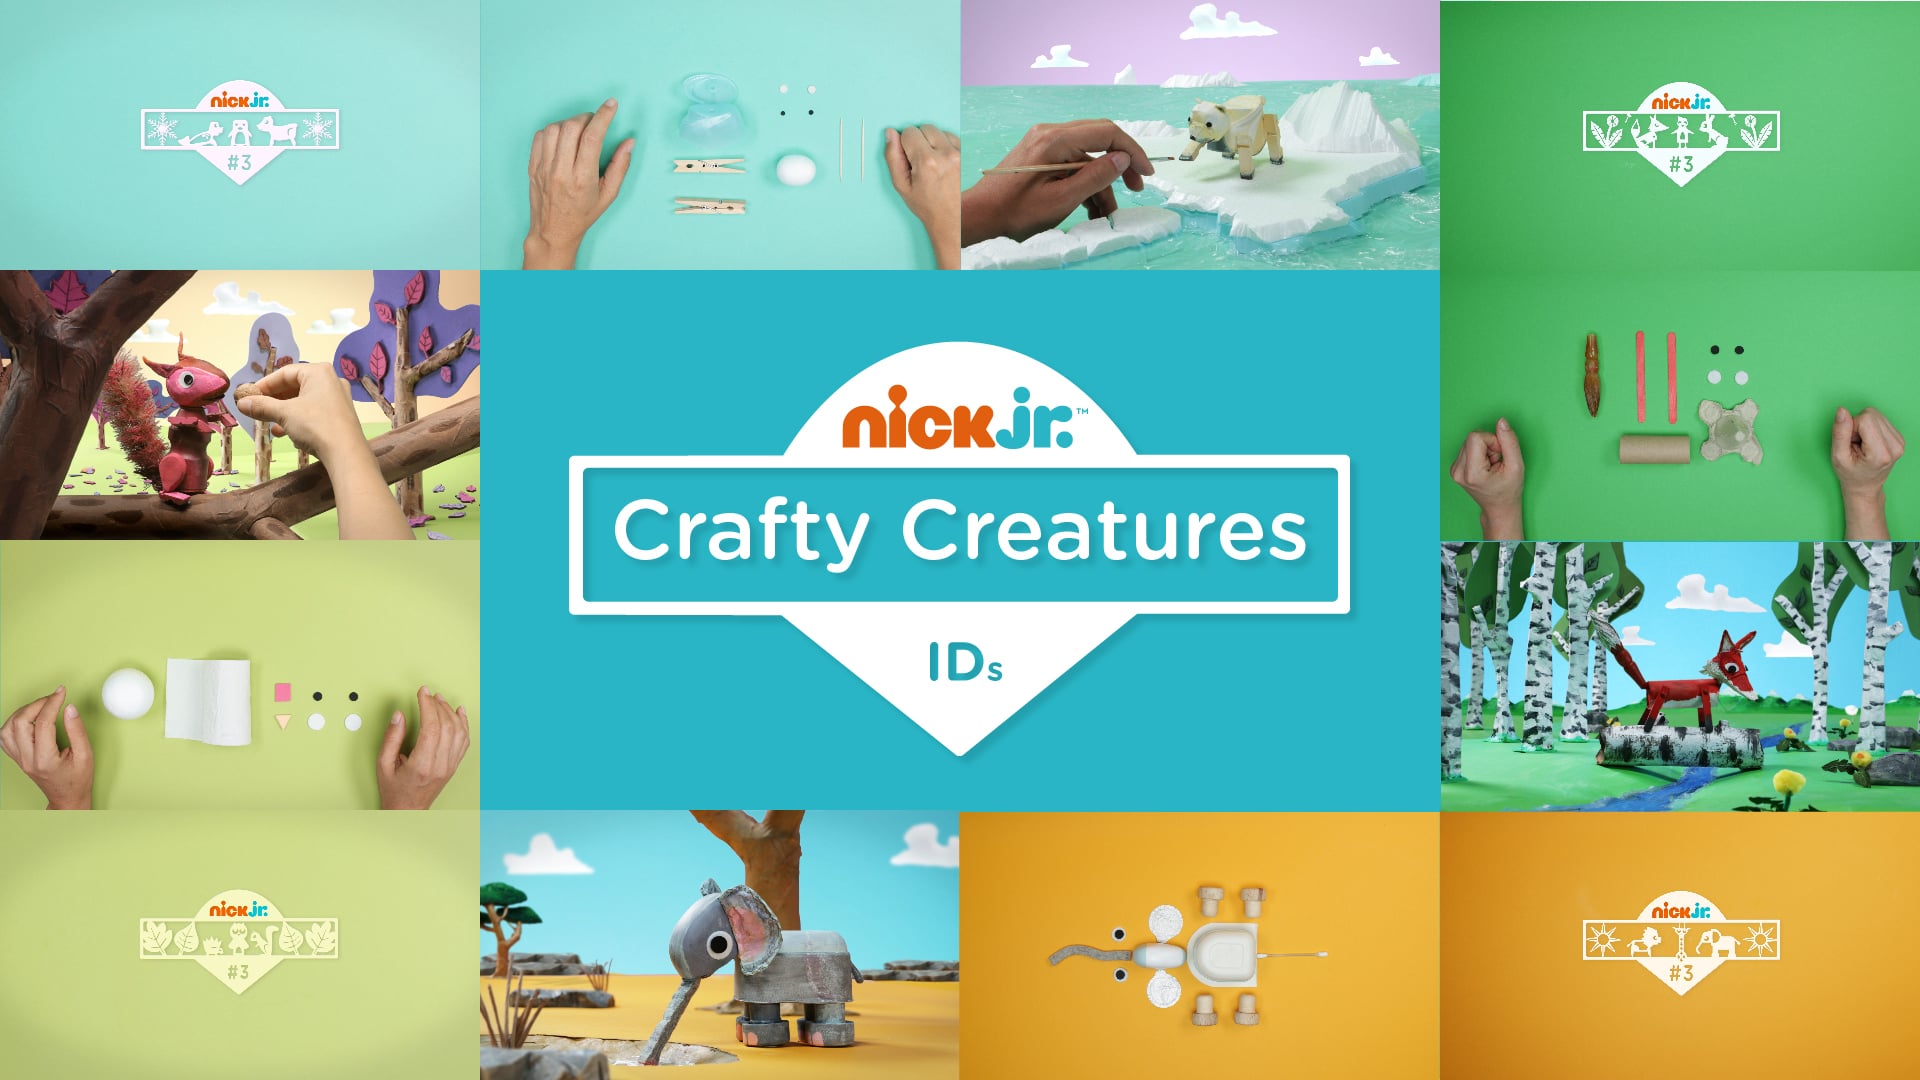 Nick jr crafty creatures vimeo